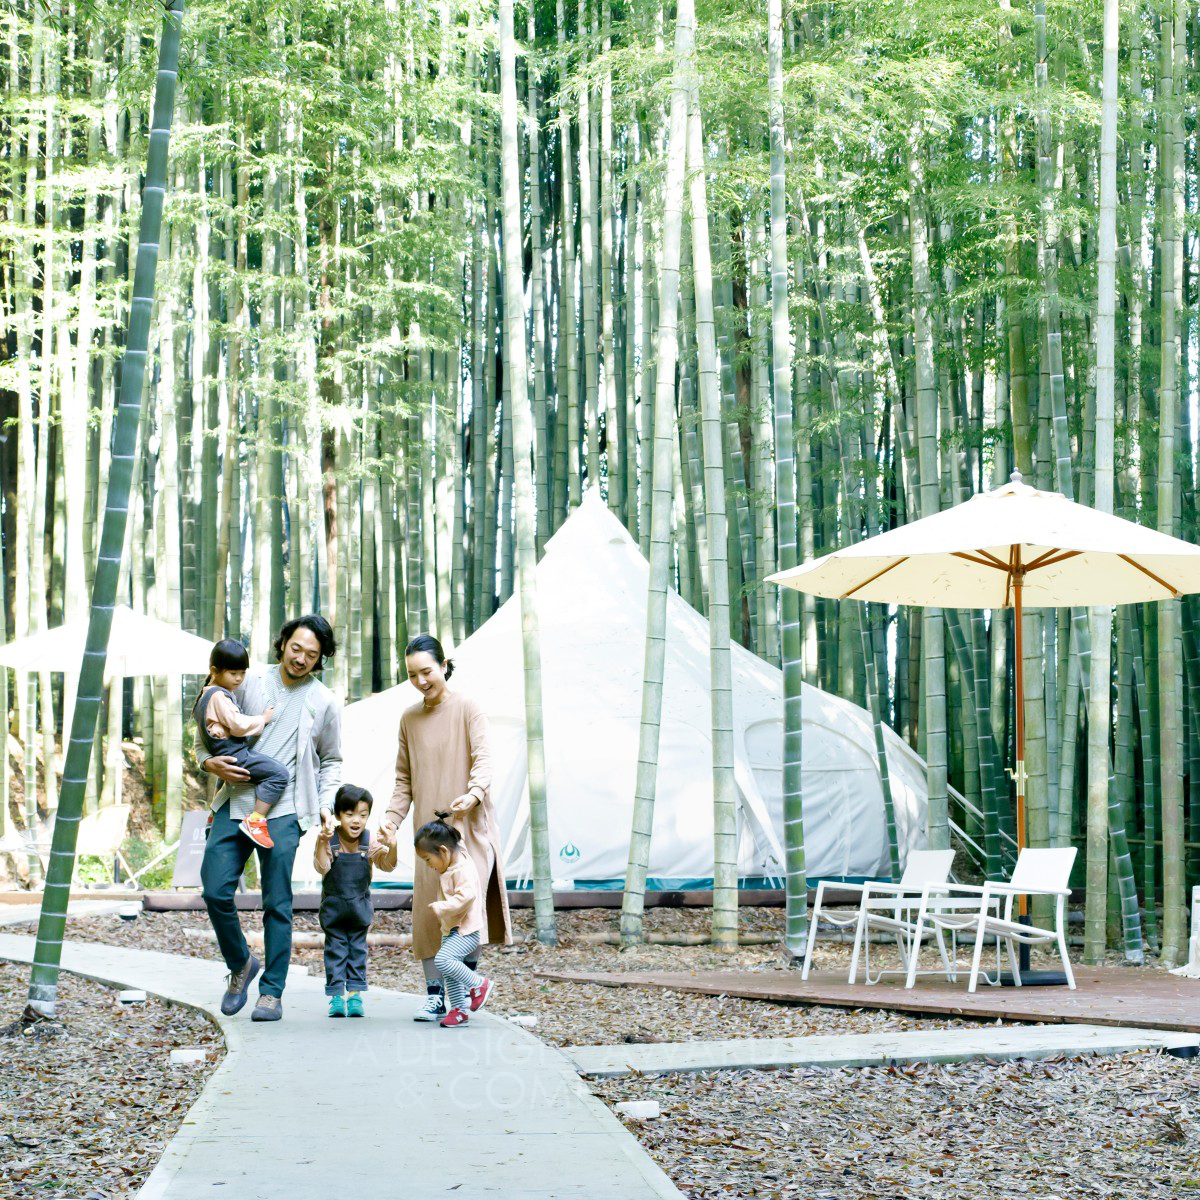 Naoyuki Aoki&#039;s The Bamboo Forest